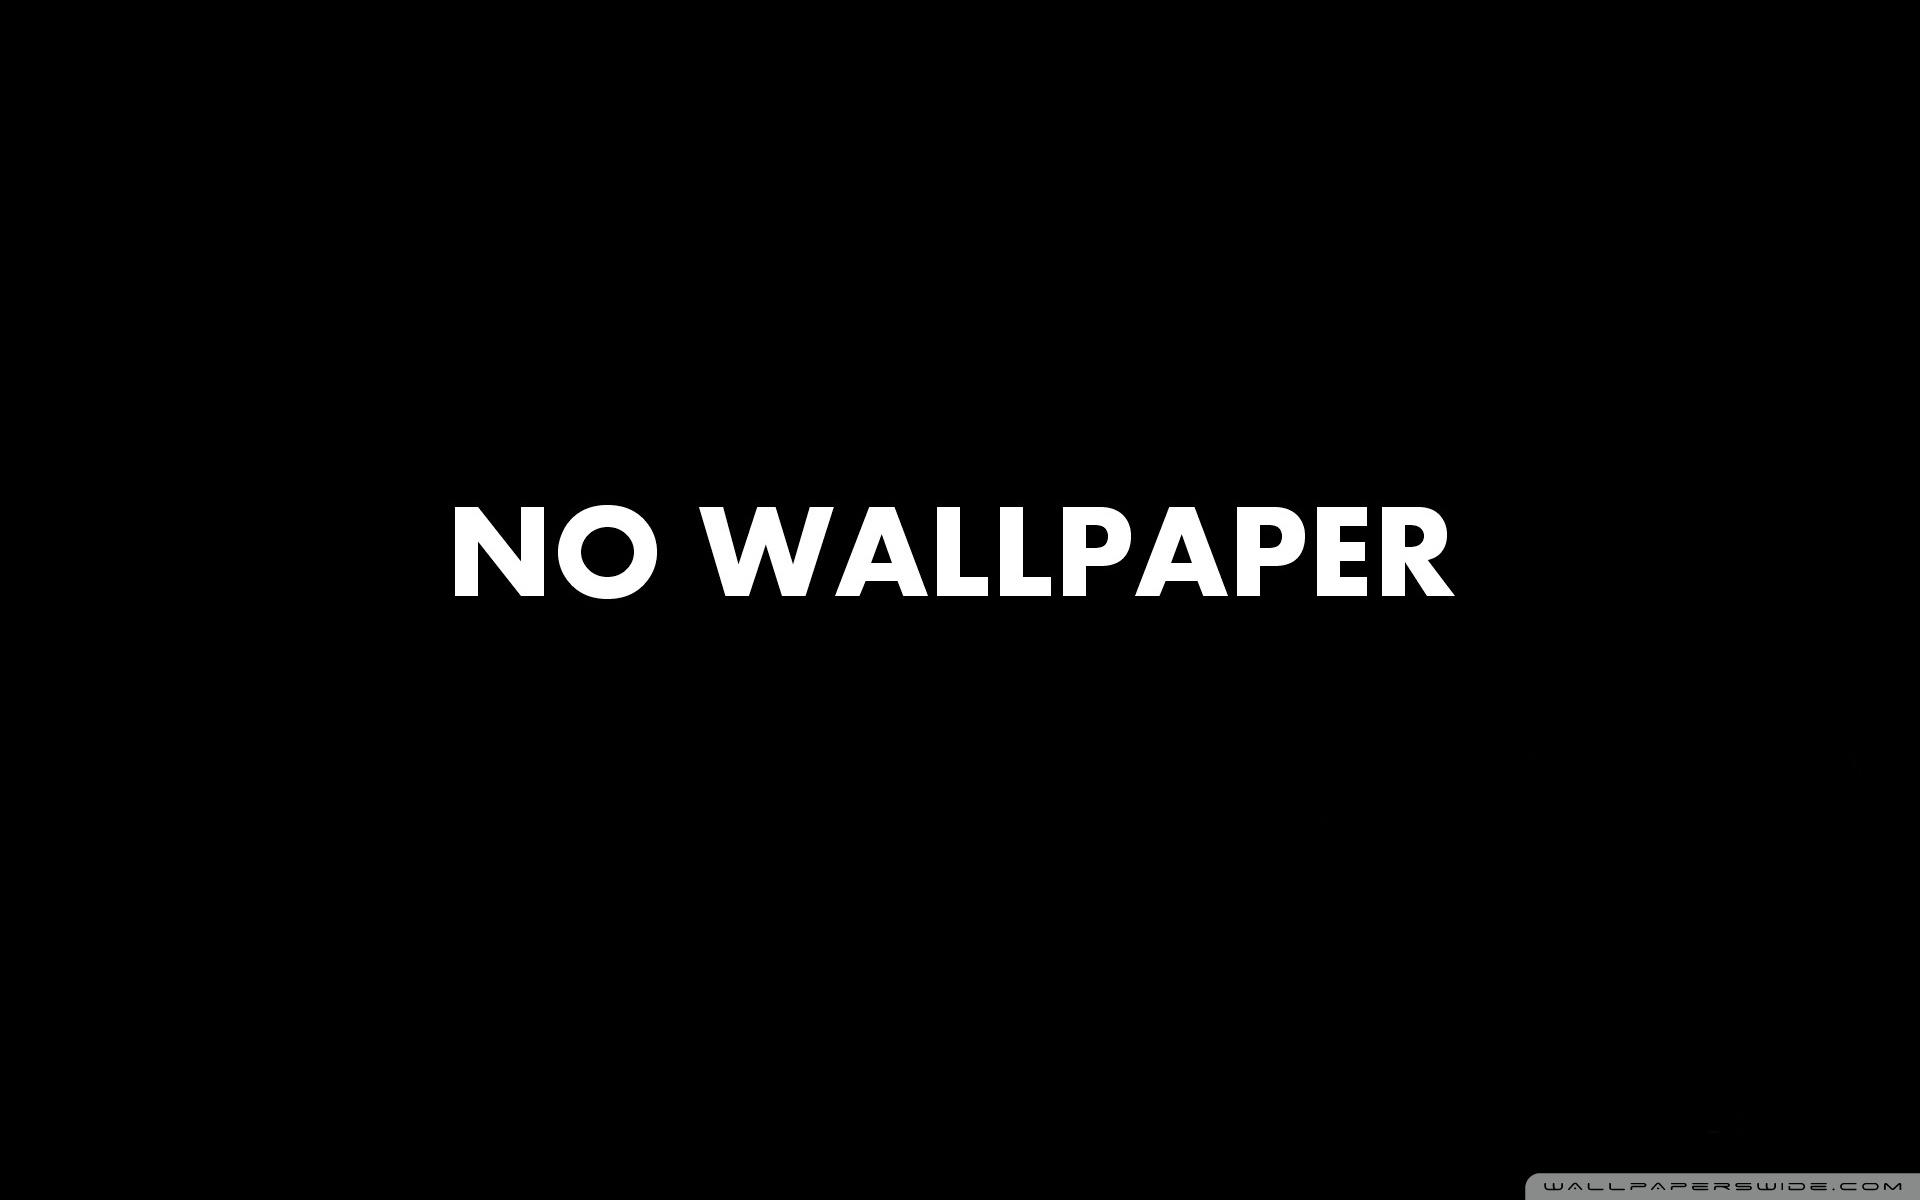 No wallpaper wallpaper - Typography wallpapers - #53608